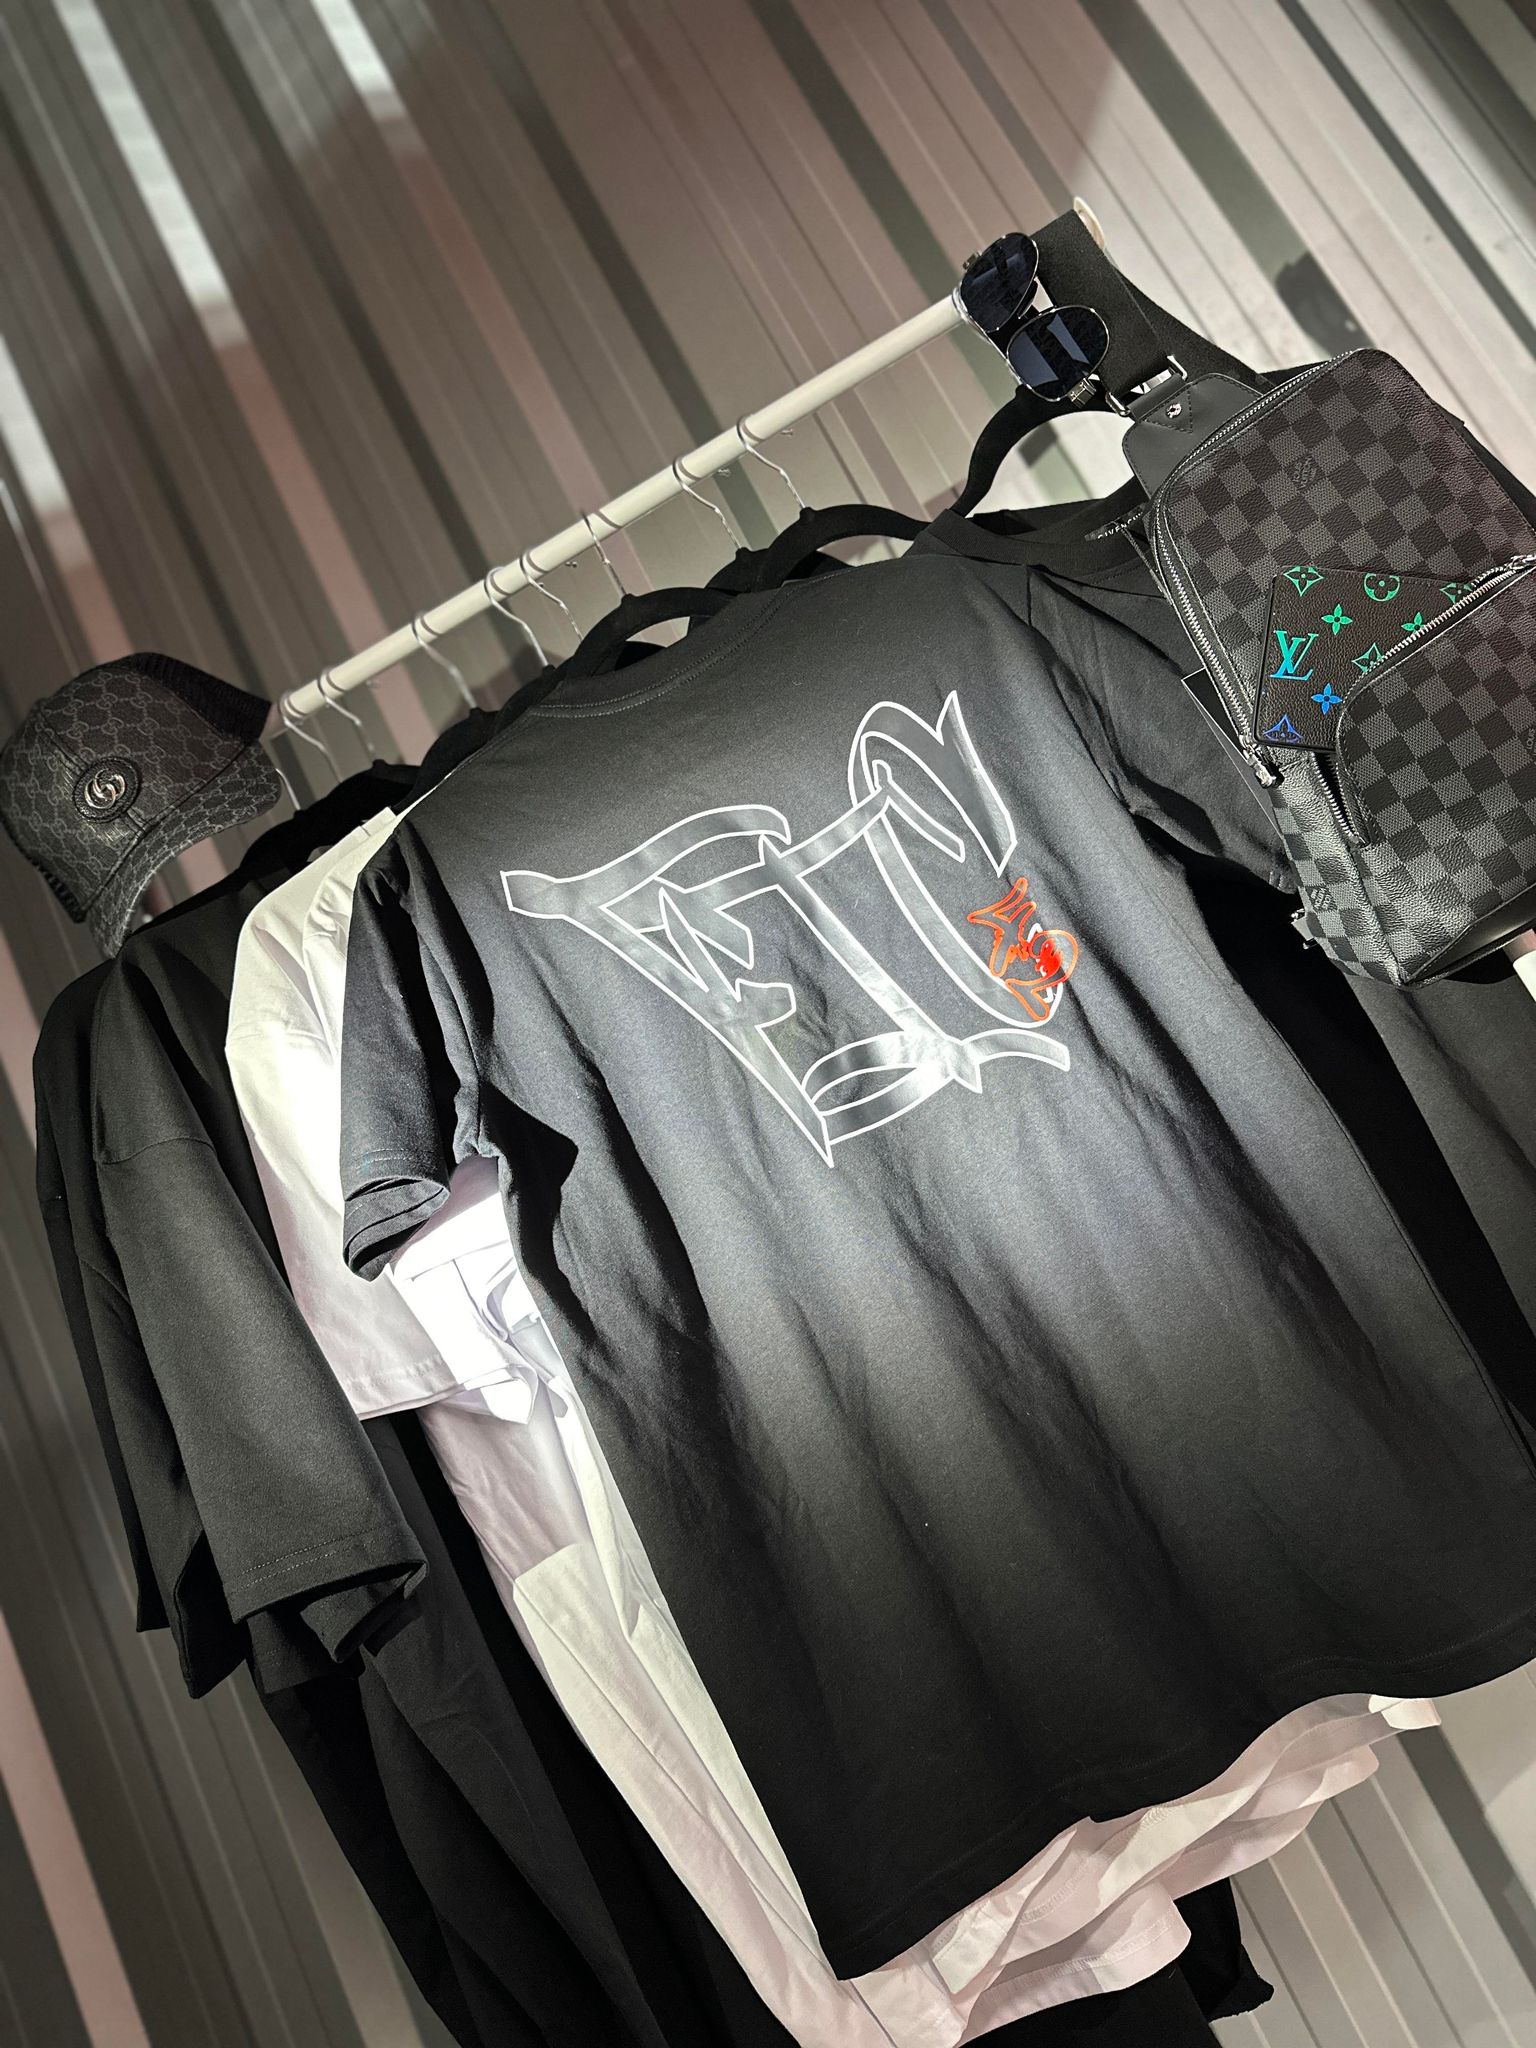 FortyTwo Clothing FTC42 Black Shirt